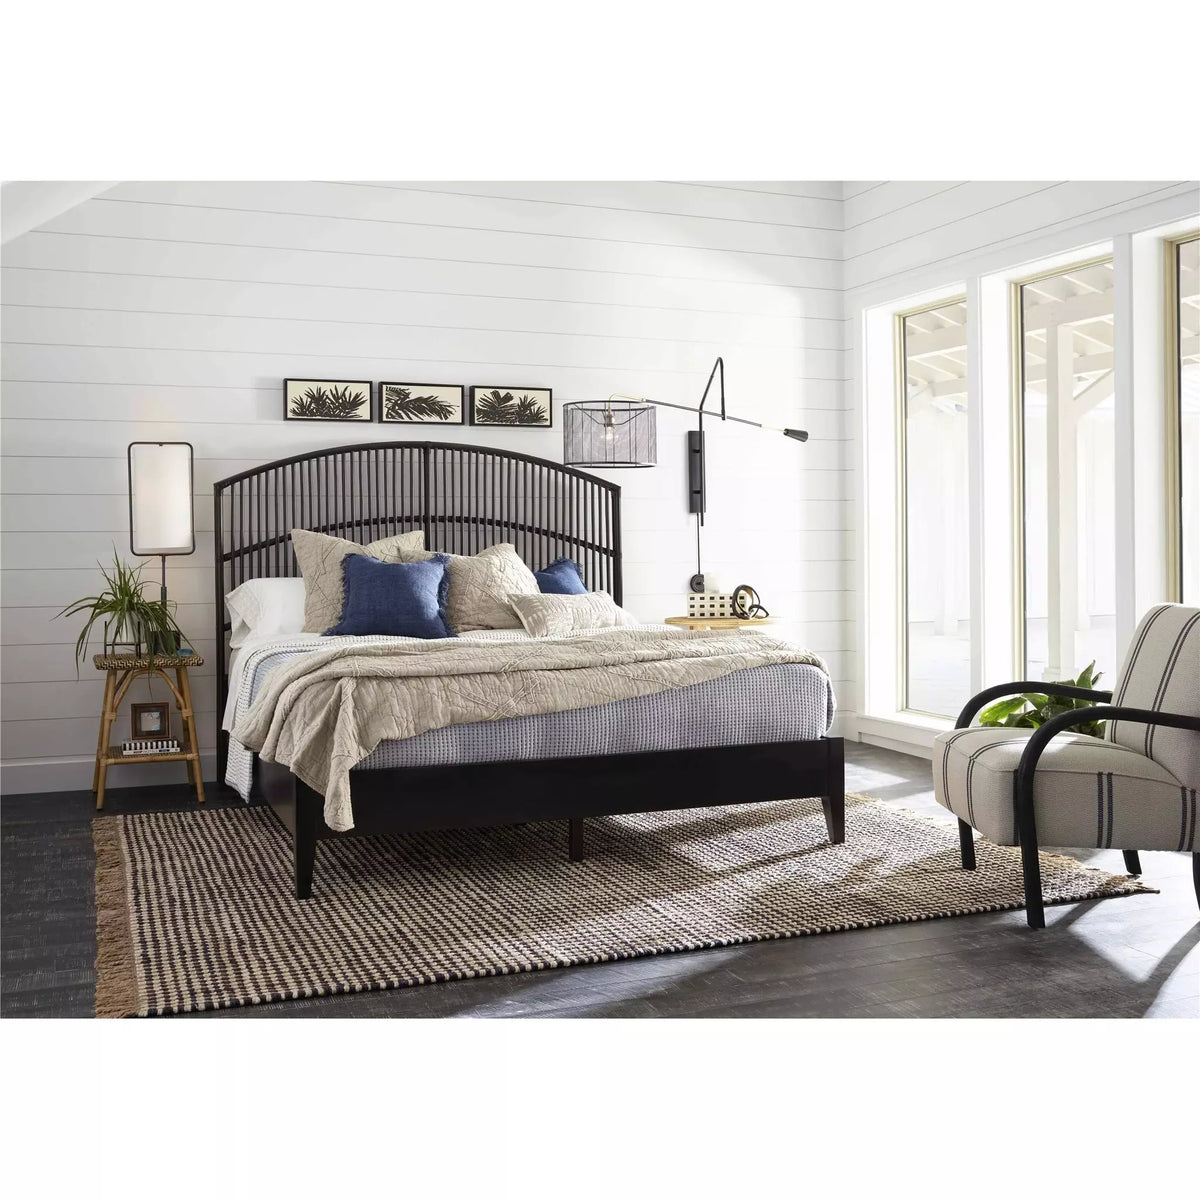 Blackadore Caye Bed - Be Bold Furniture